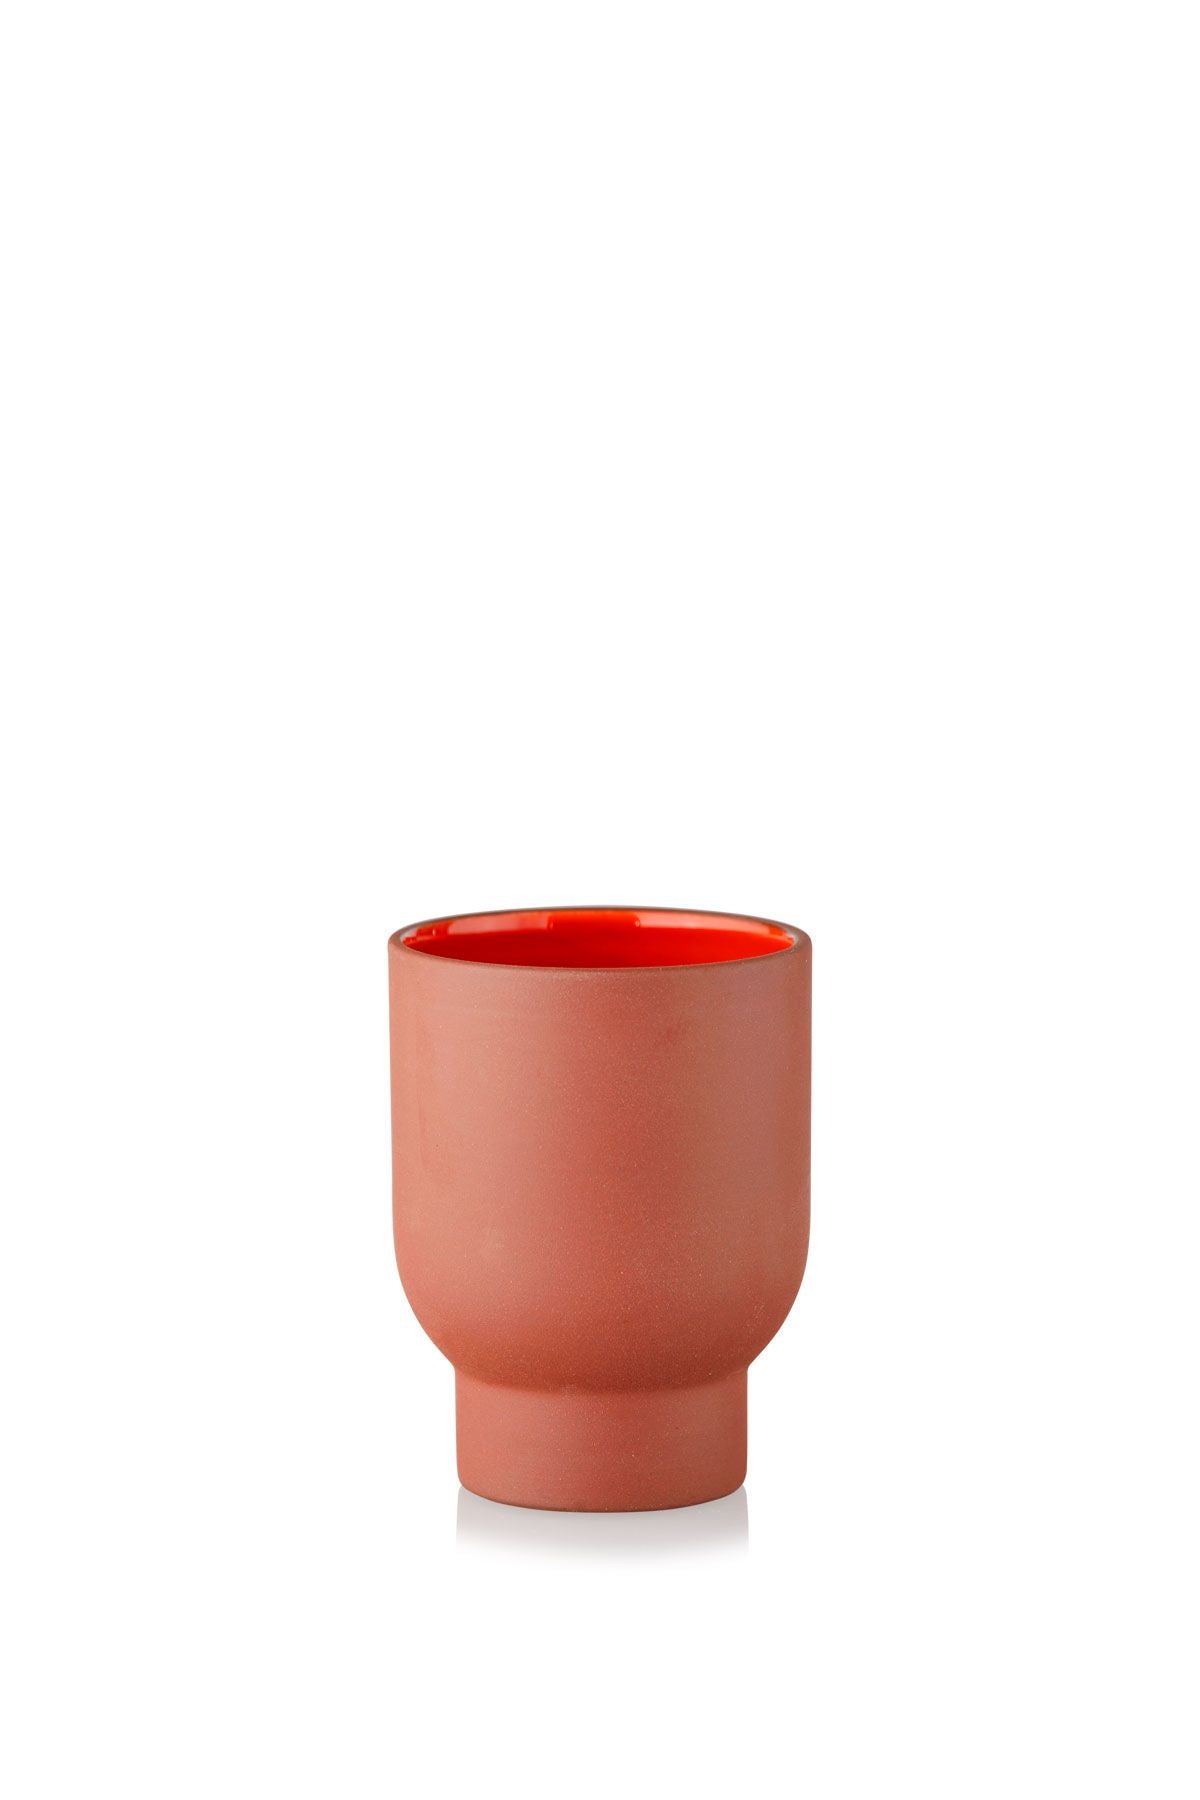 Studio About Clayware -sæt med 2 kopper, terracotta/rød